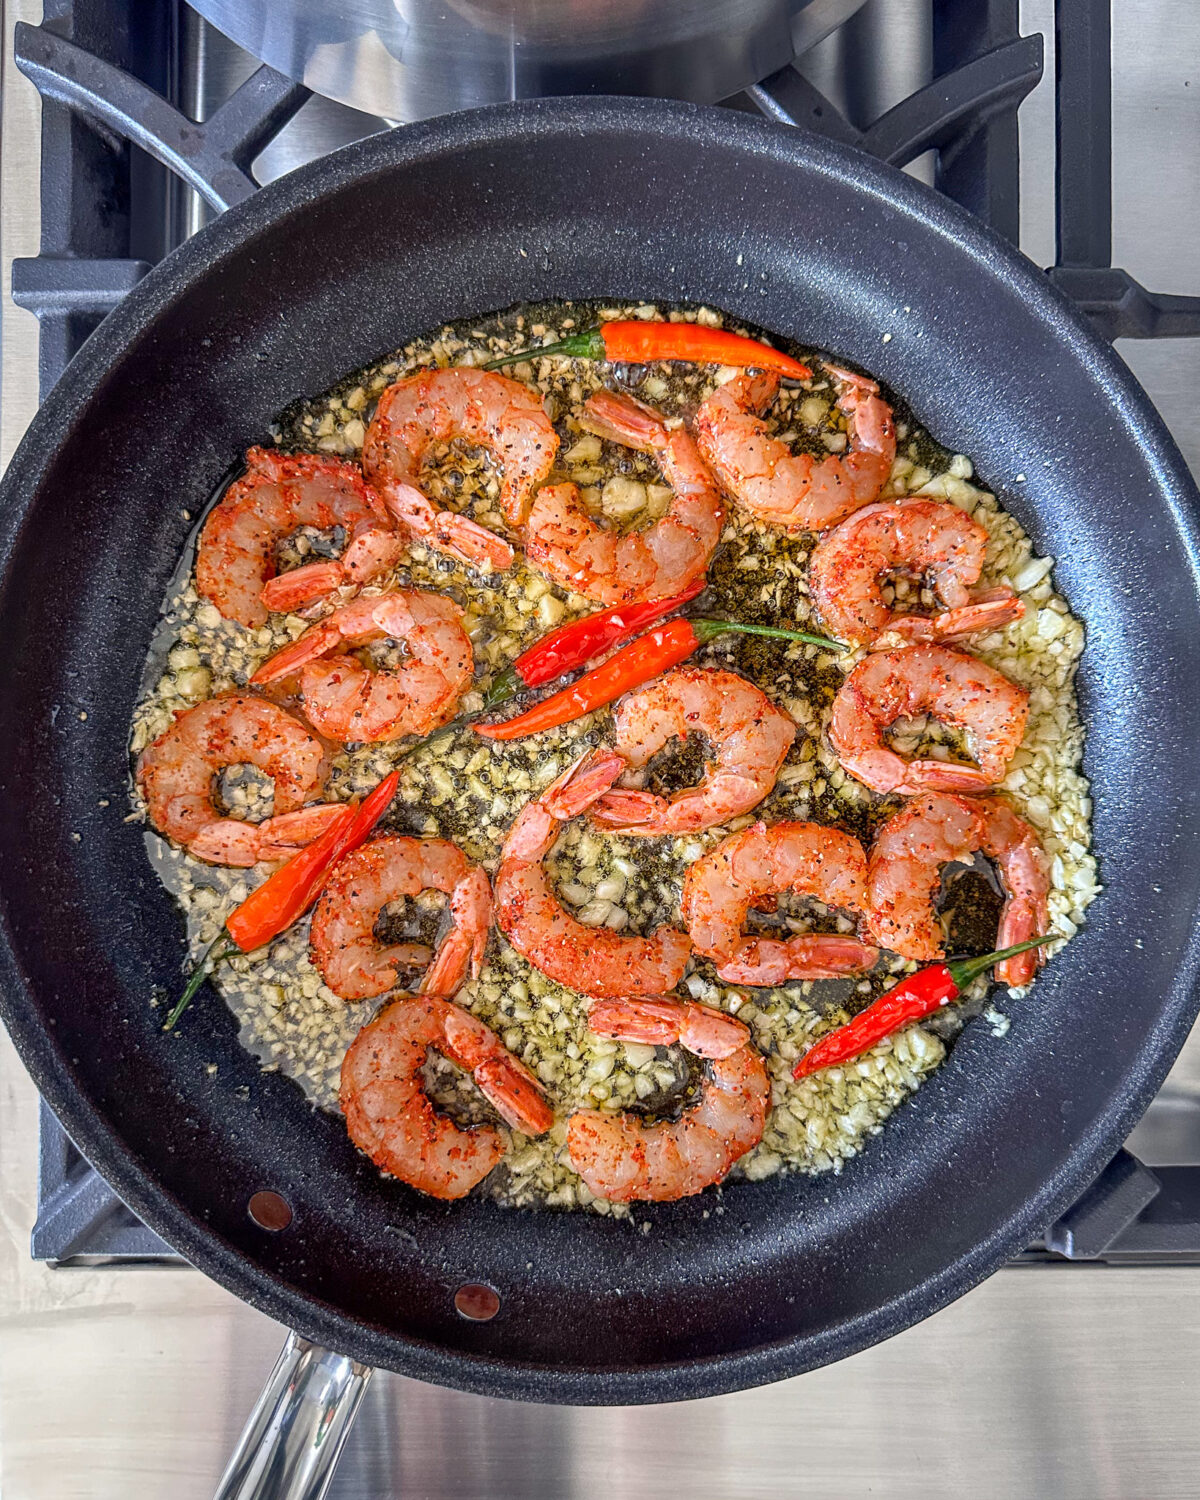 Add the seasoned shrimp into the skillet.